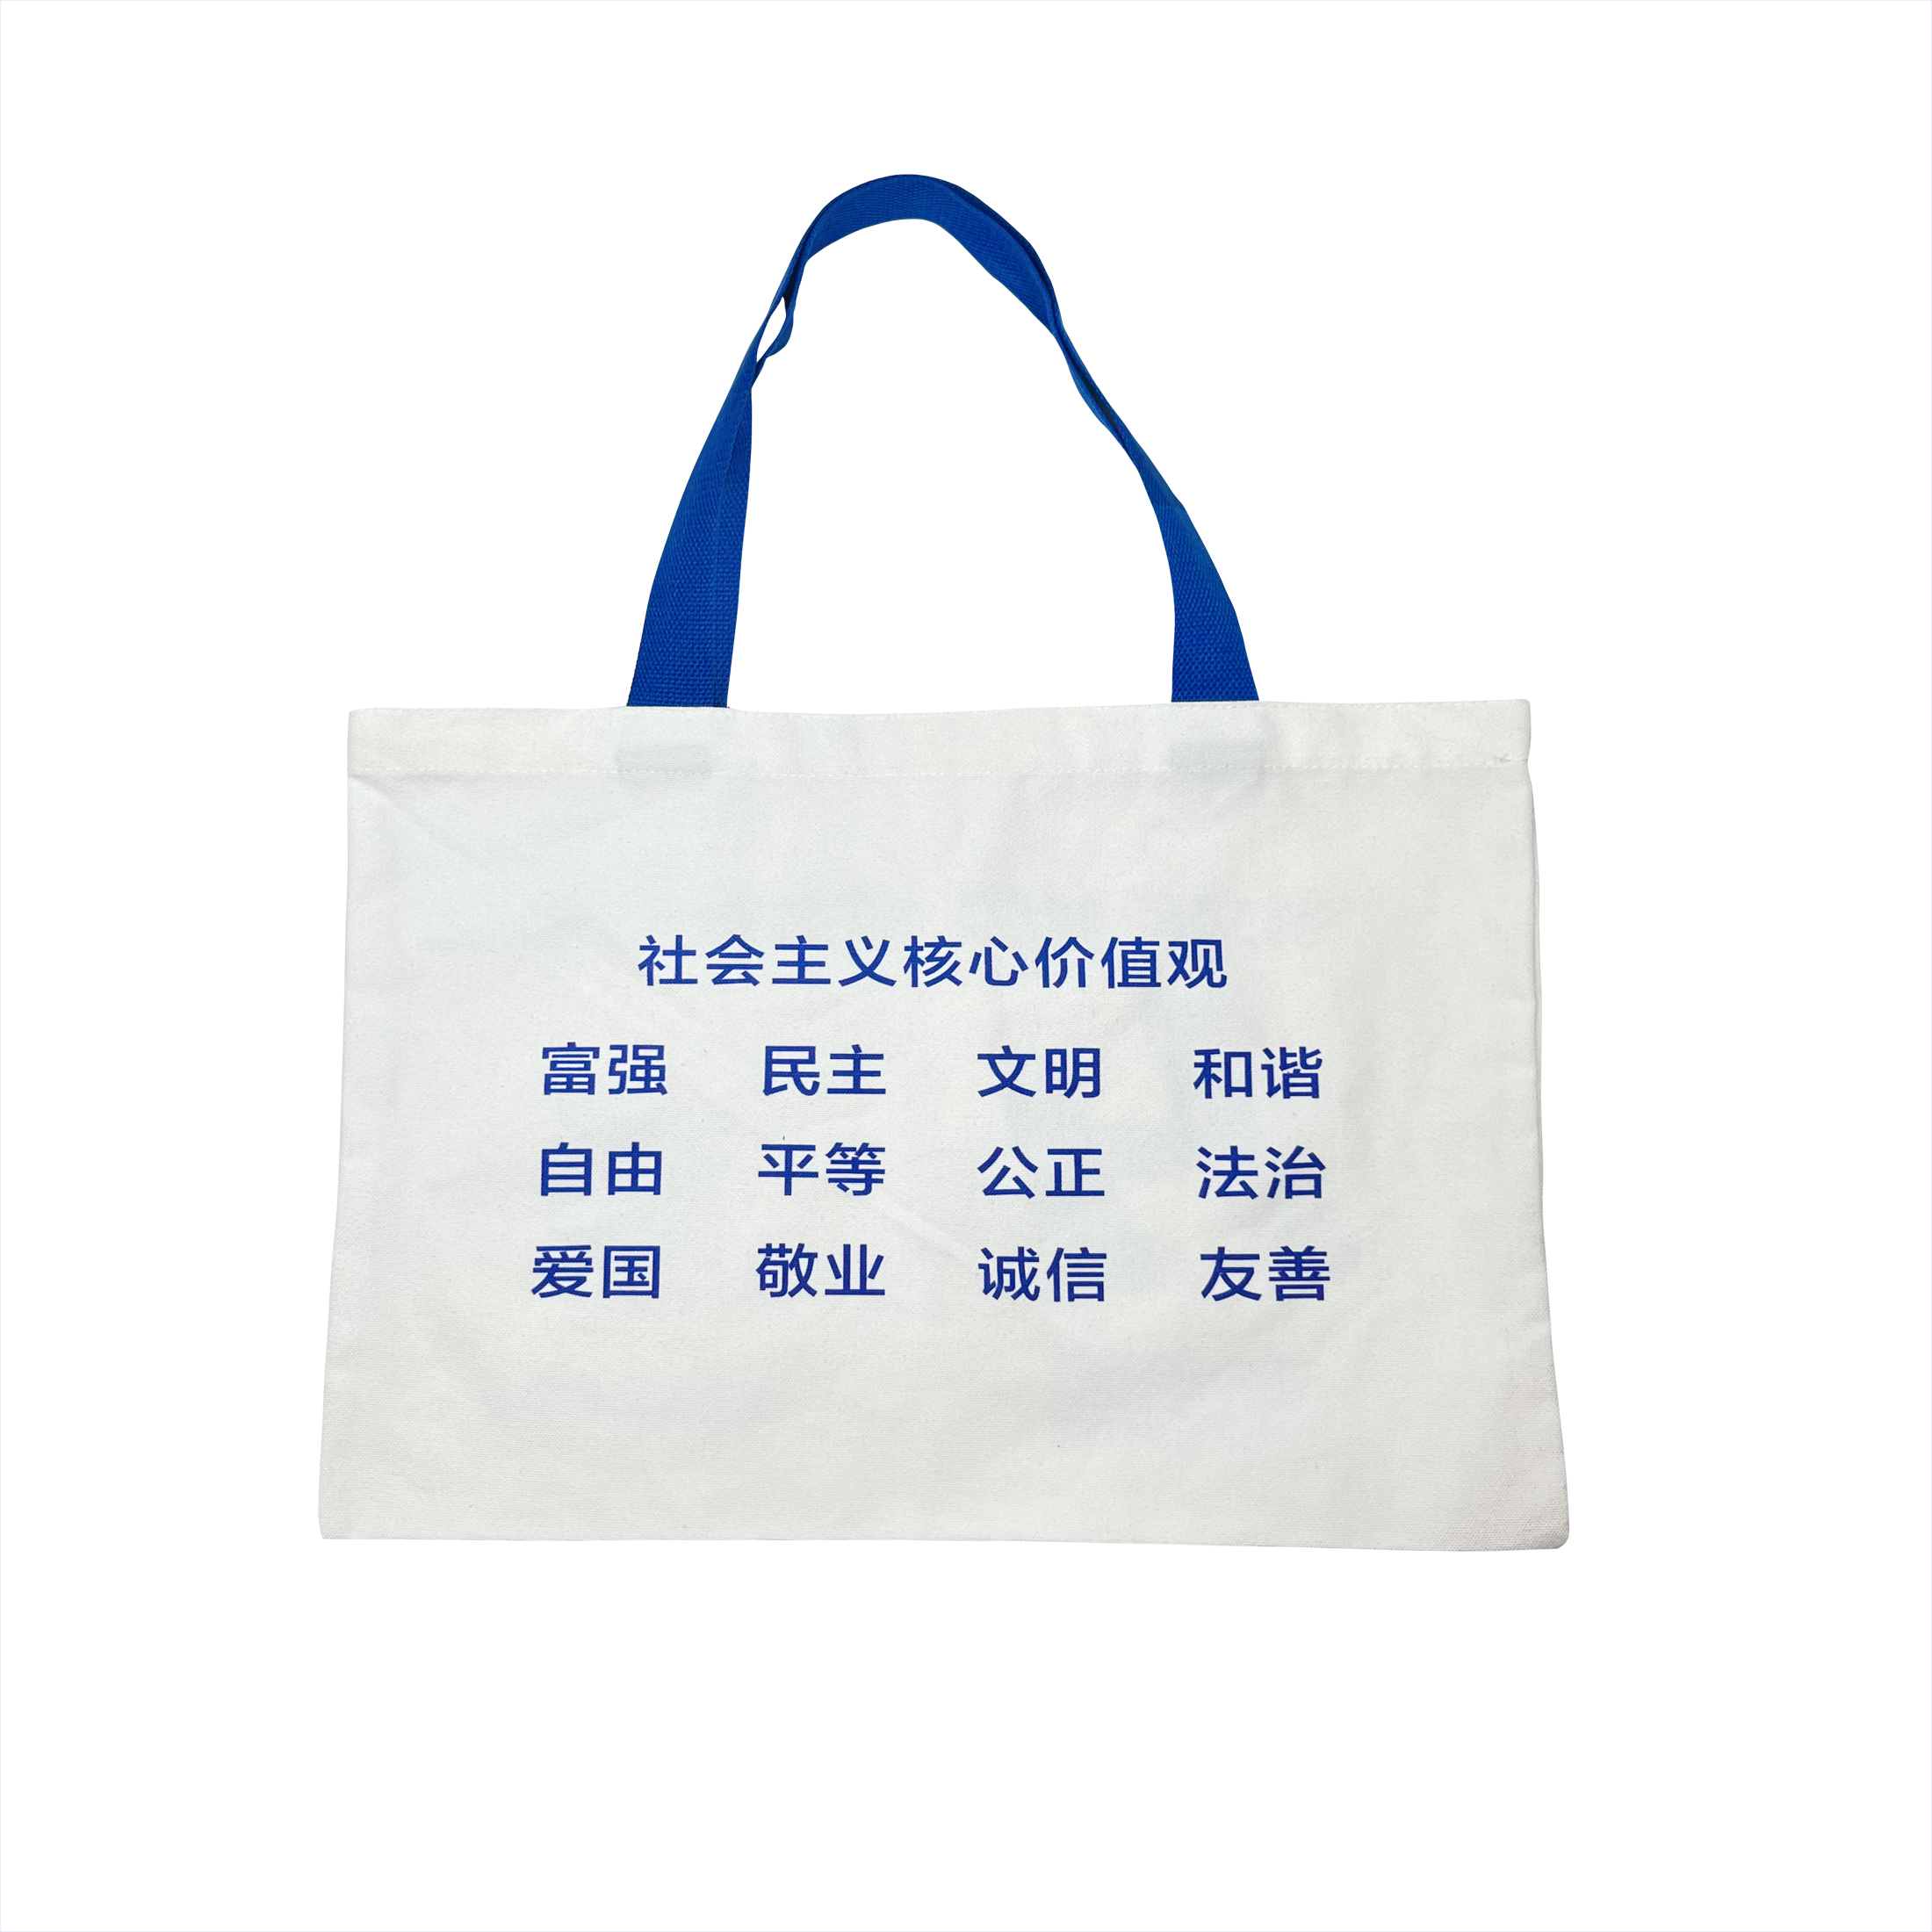 Socialist canvas bag fashion bag